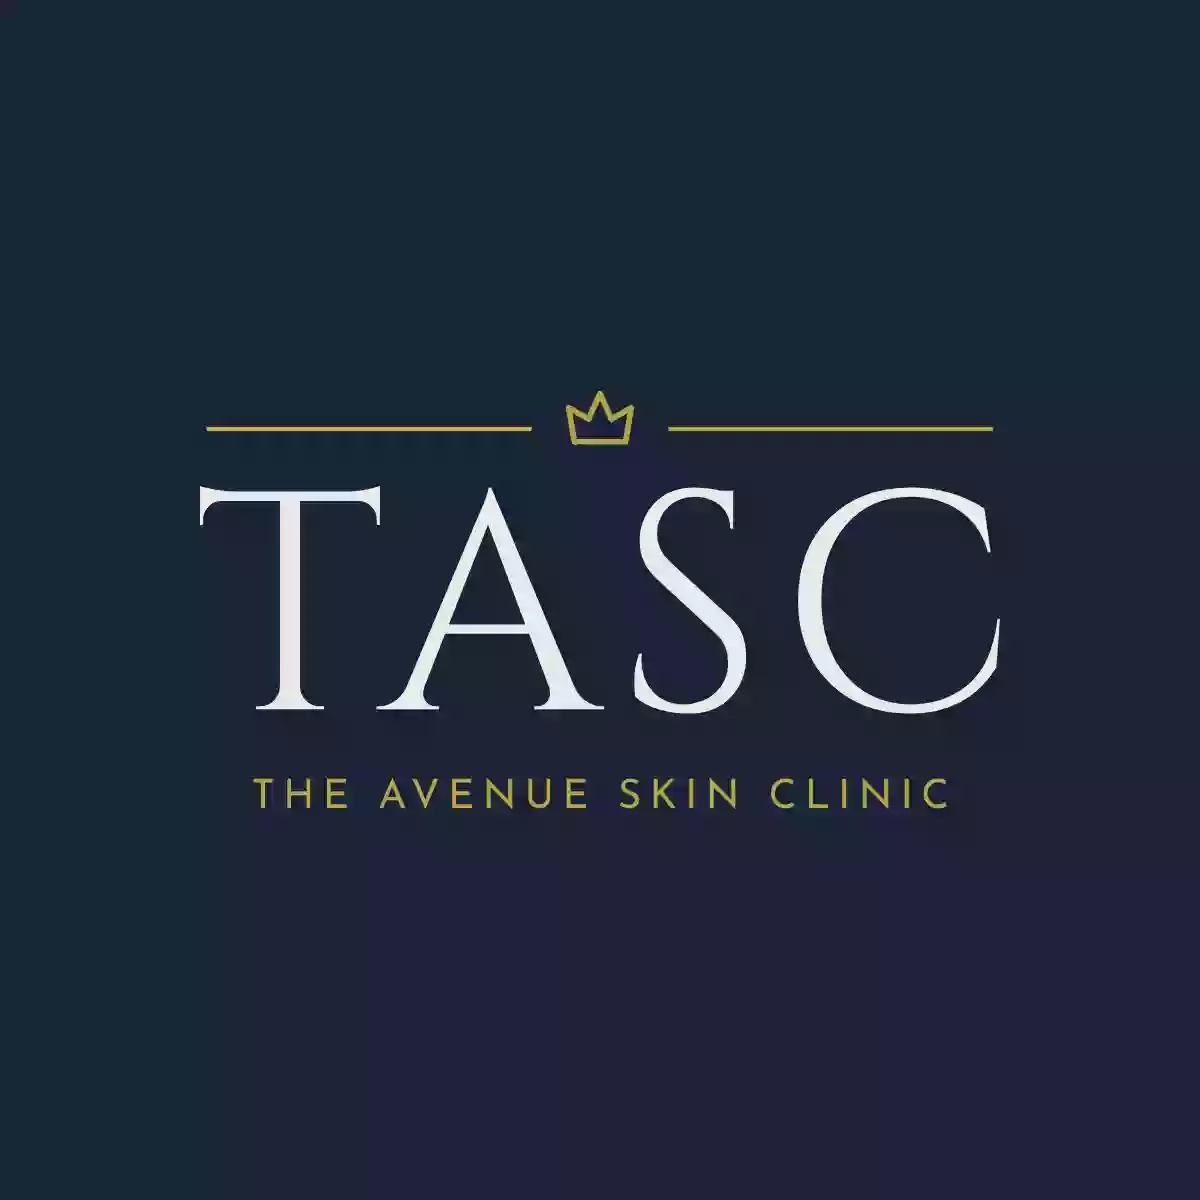 The Avenue Skin Clinic (TASC)